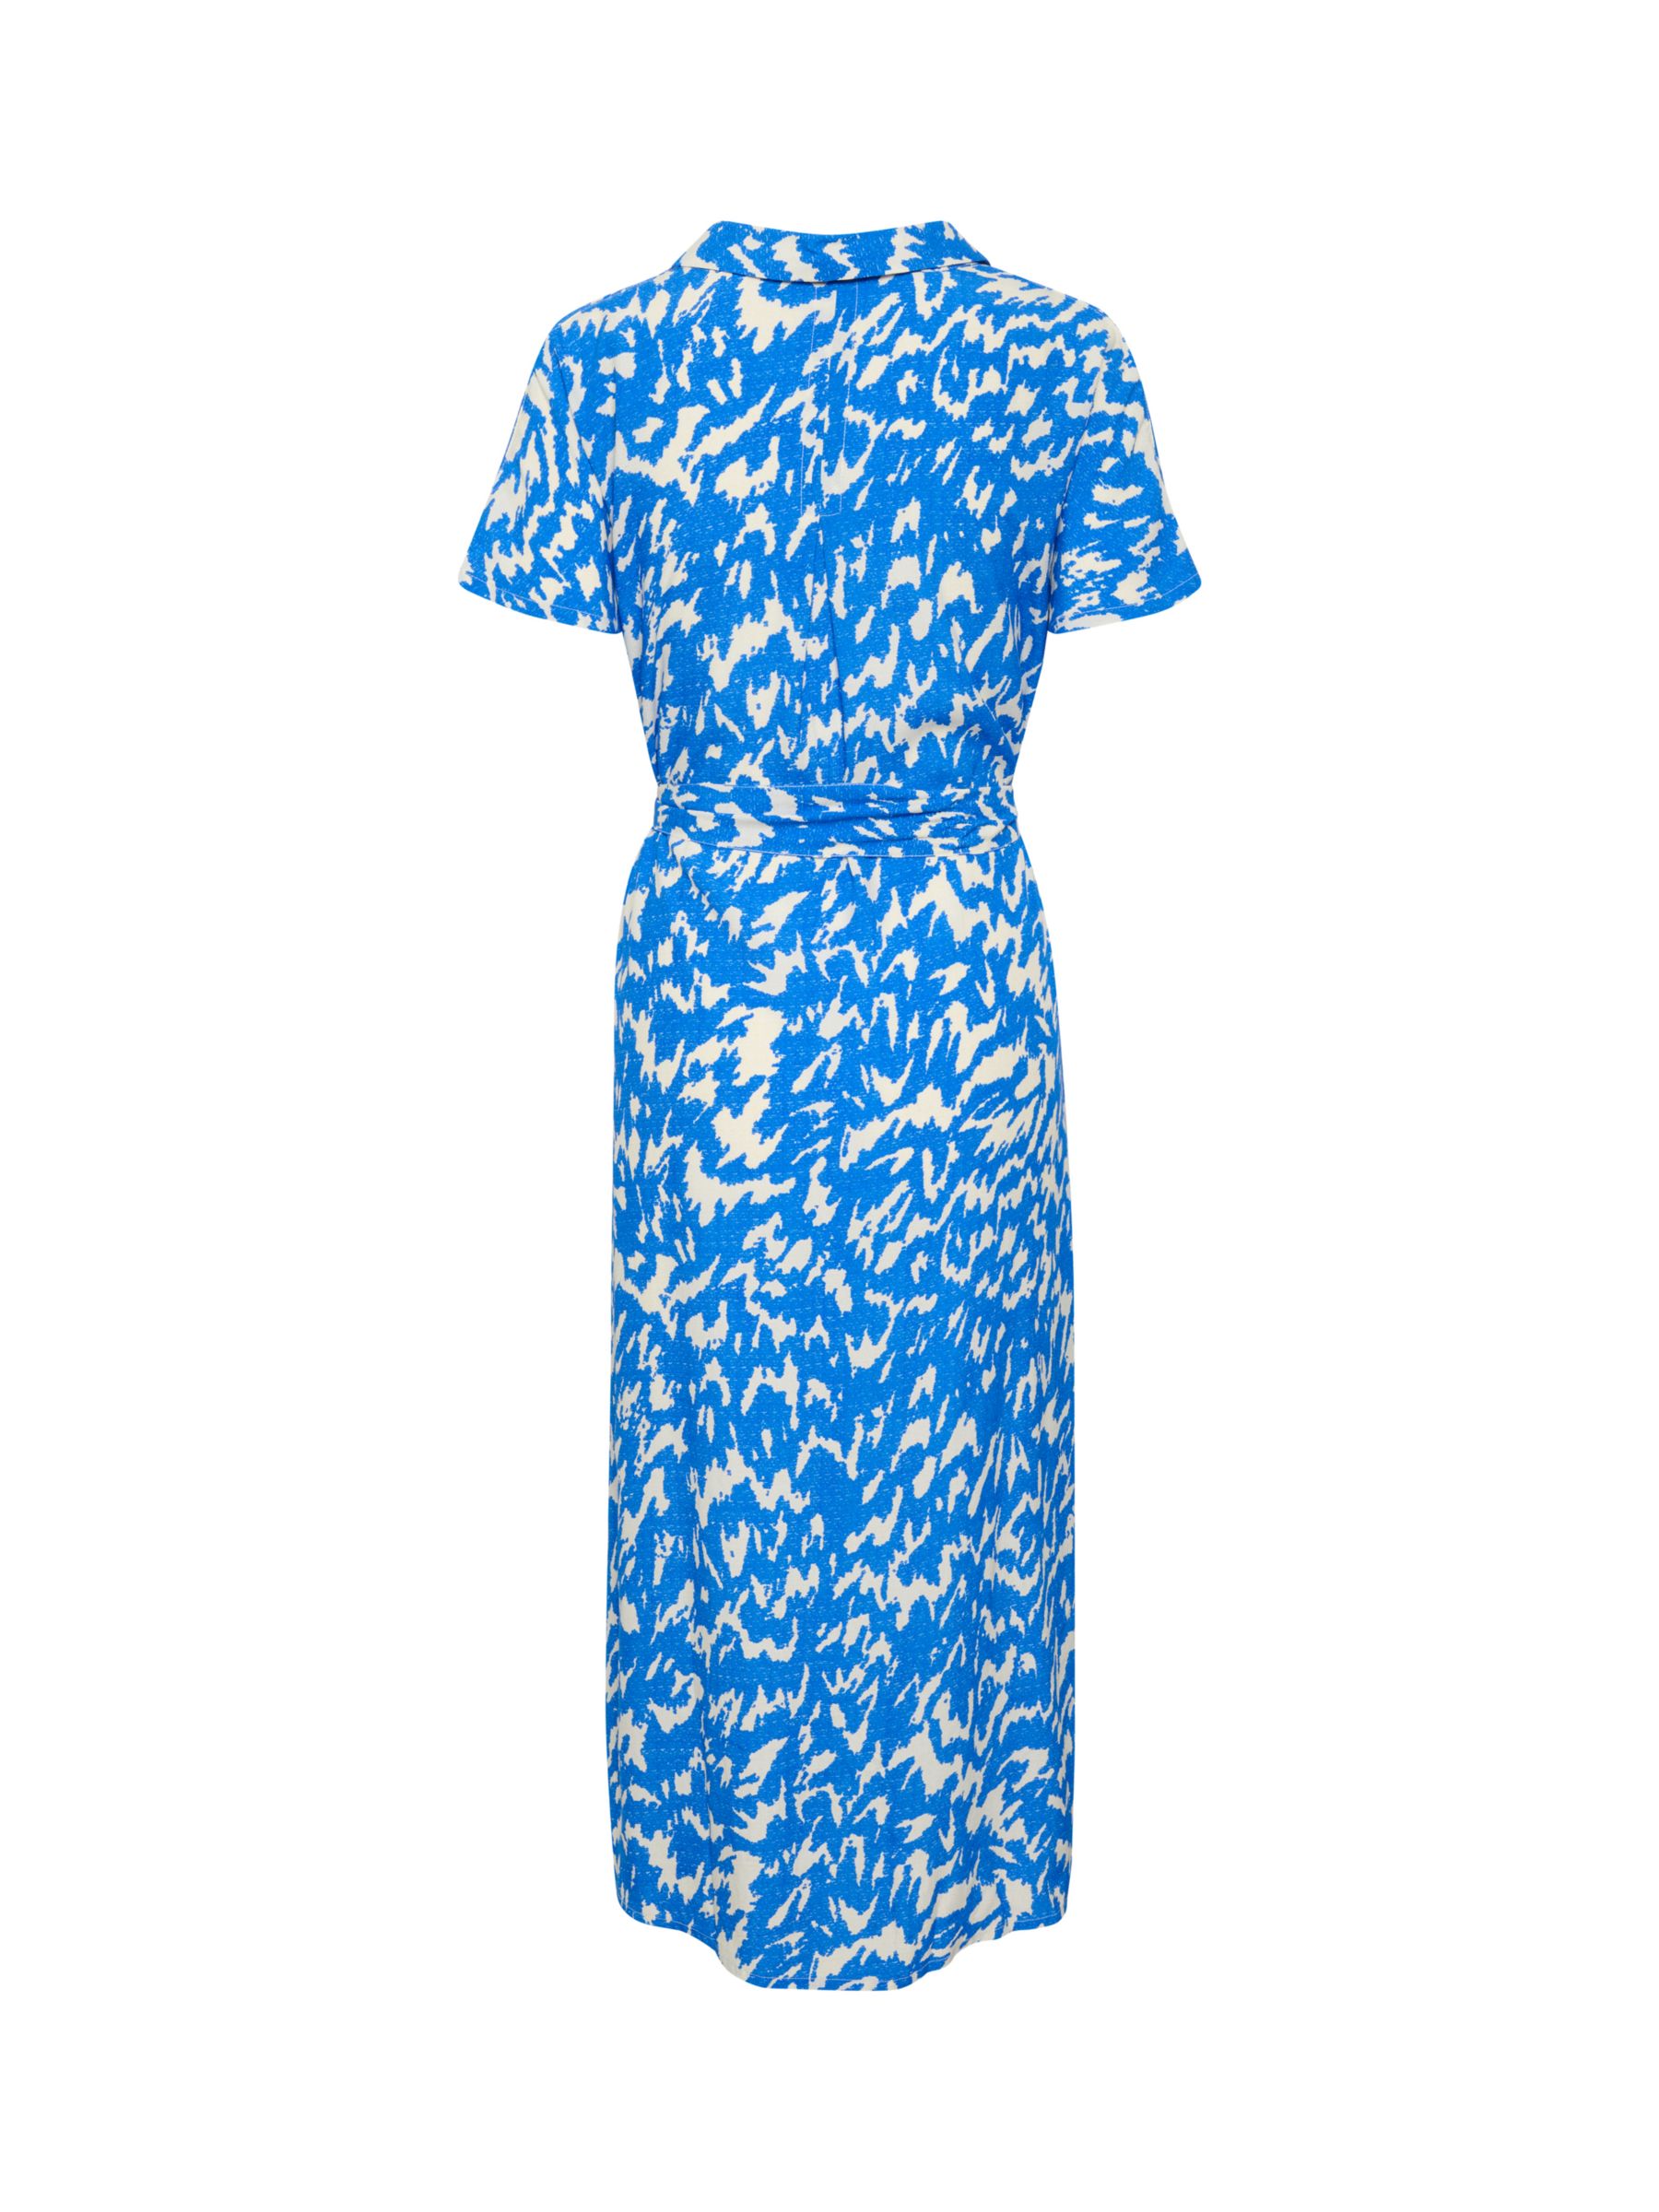 Saint Tropez Blanca Ecovero Short Sleeve Shirt Dress, Surf Blue Nature, XS